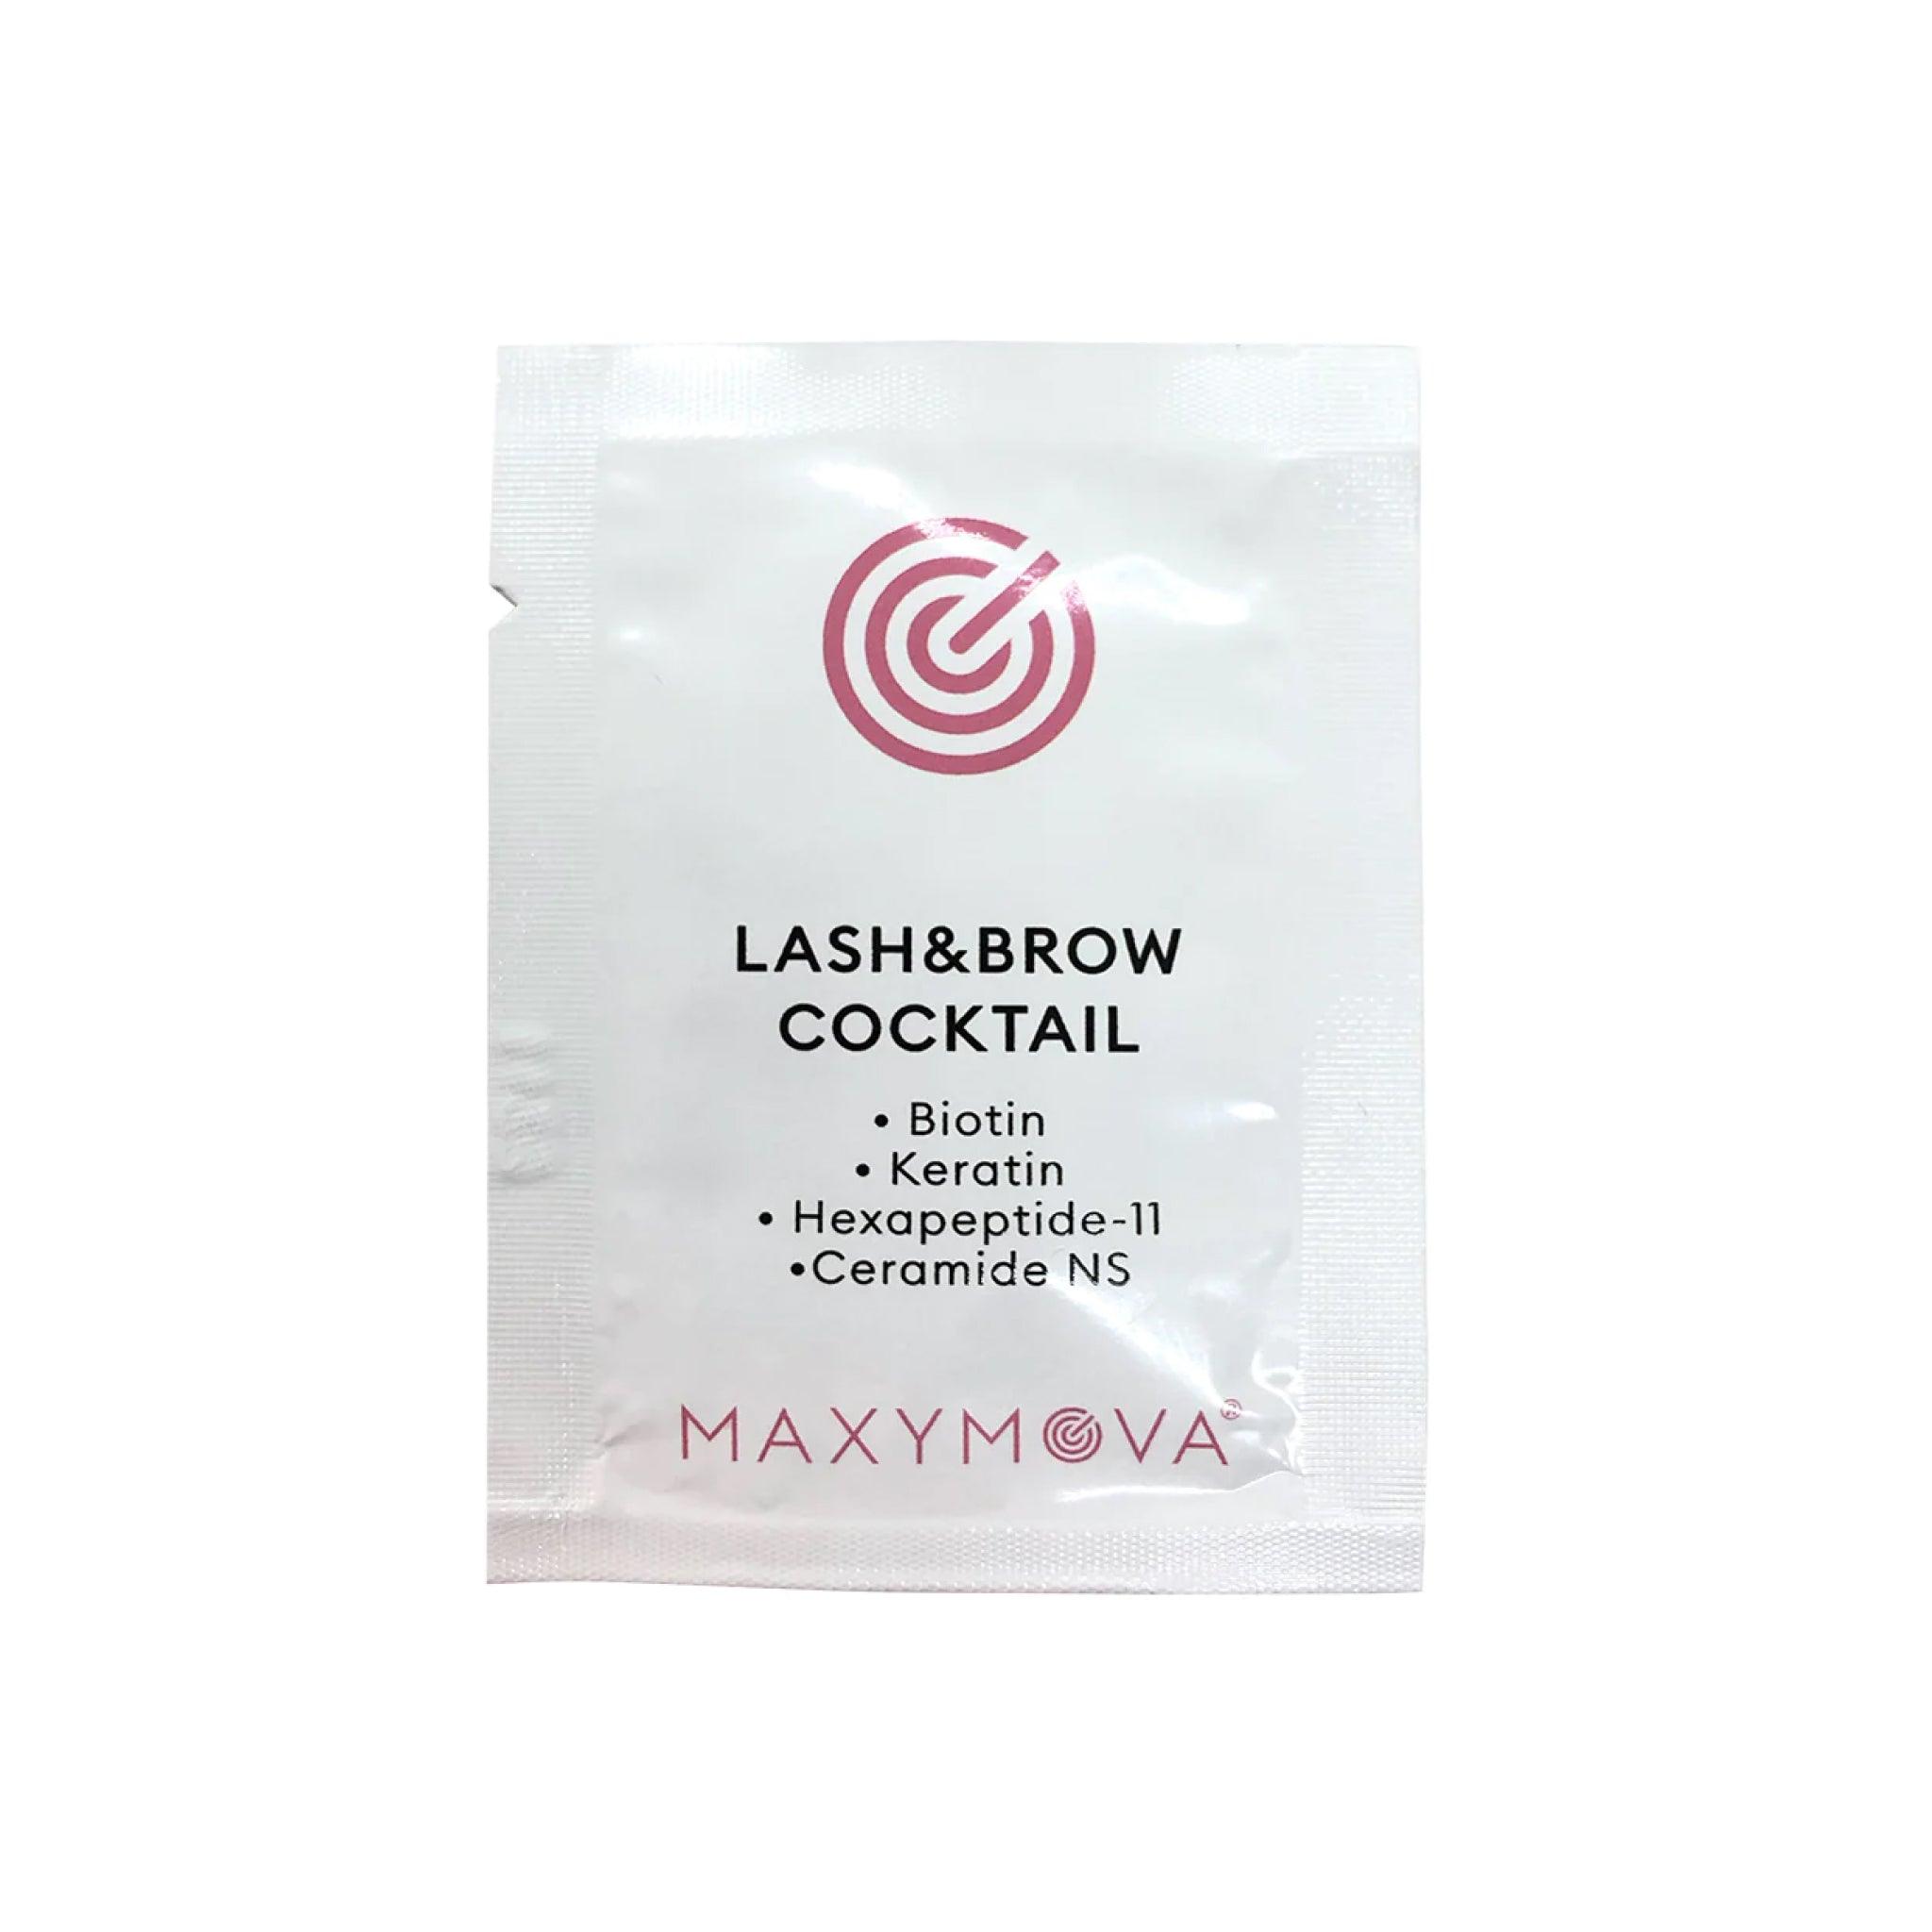 Maxymova Lash and Brow Cocktail Sample - The Beauty House Shop